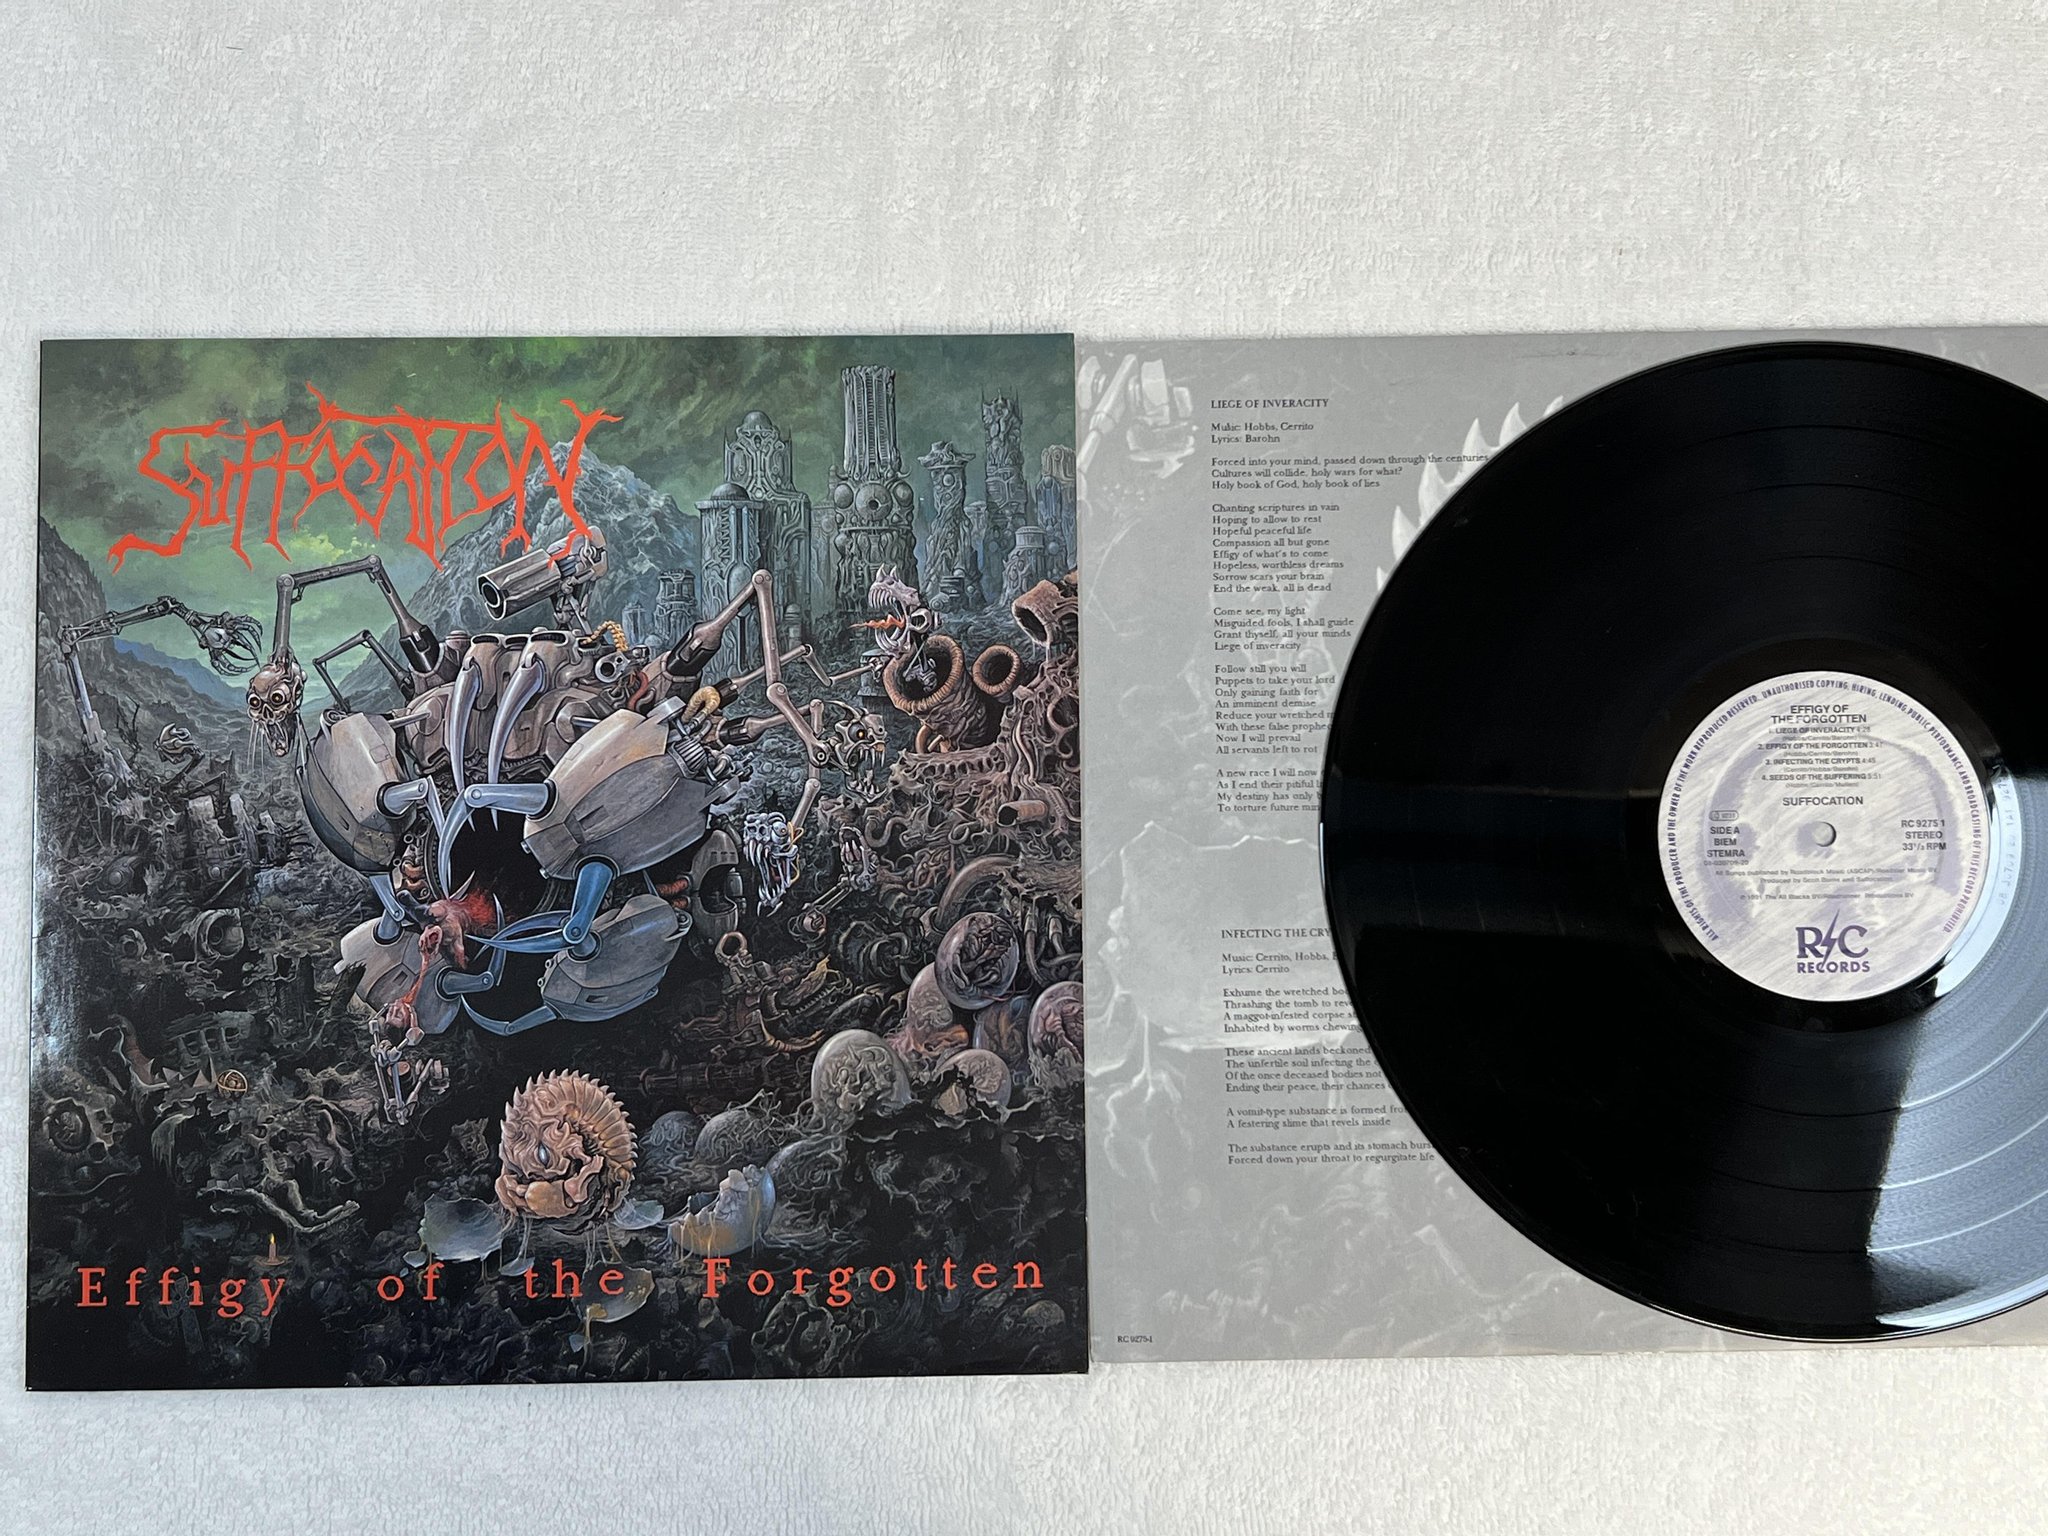 Omslagsbild för skivan SUFFOCATION Effigy Of The Forgotten LP -91 r/c rc 9275-1 ** death metal **